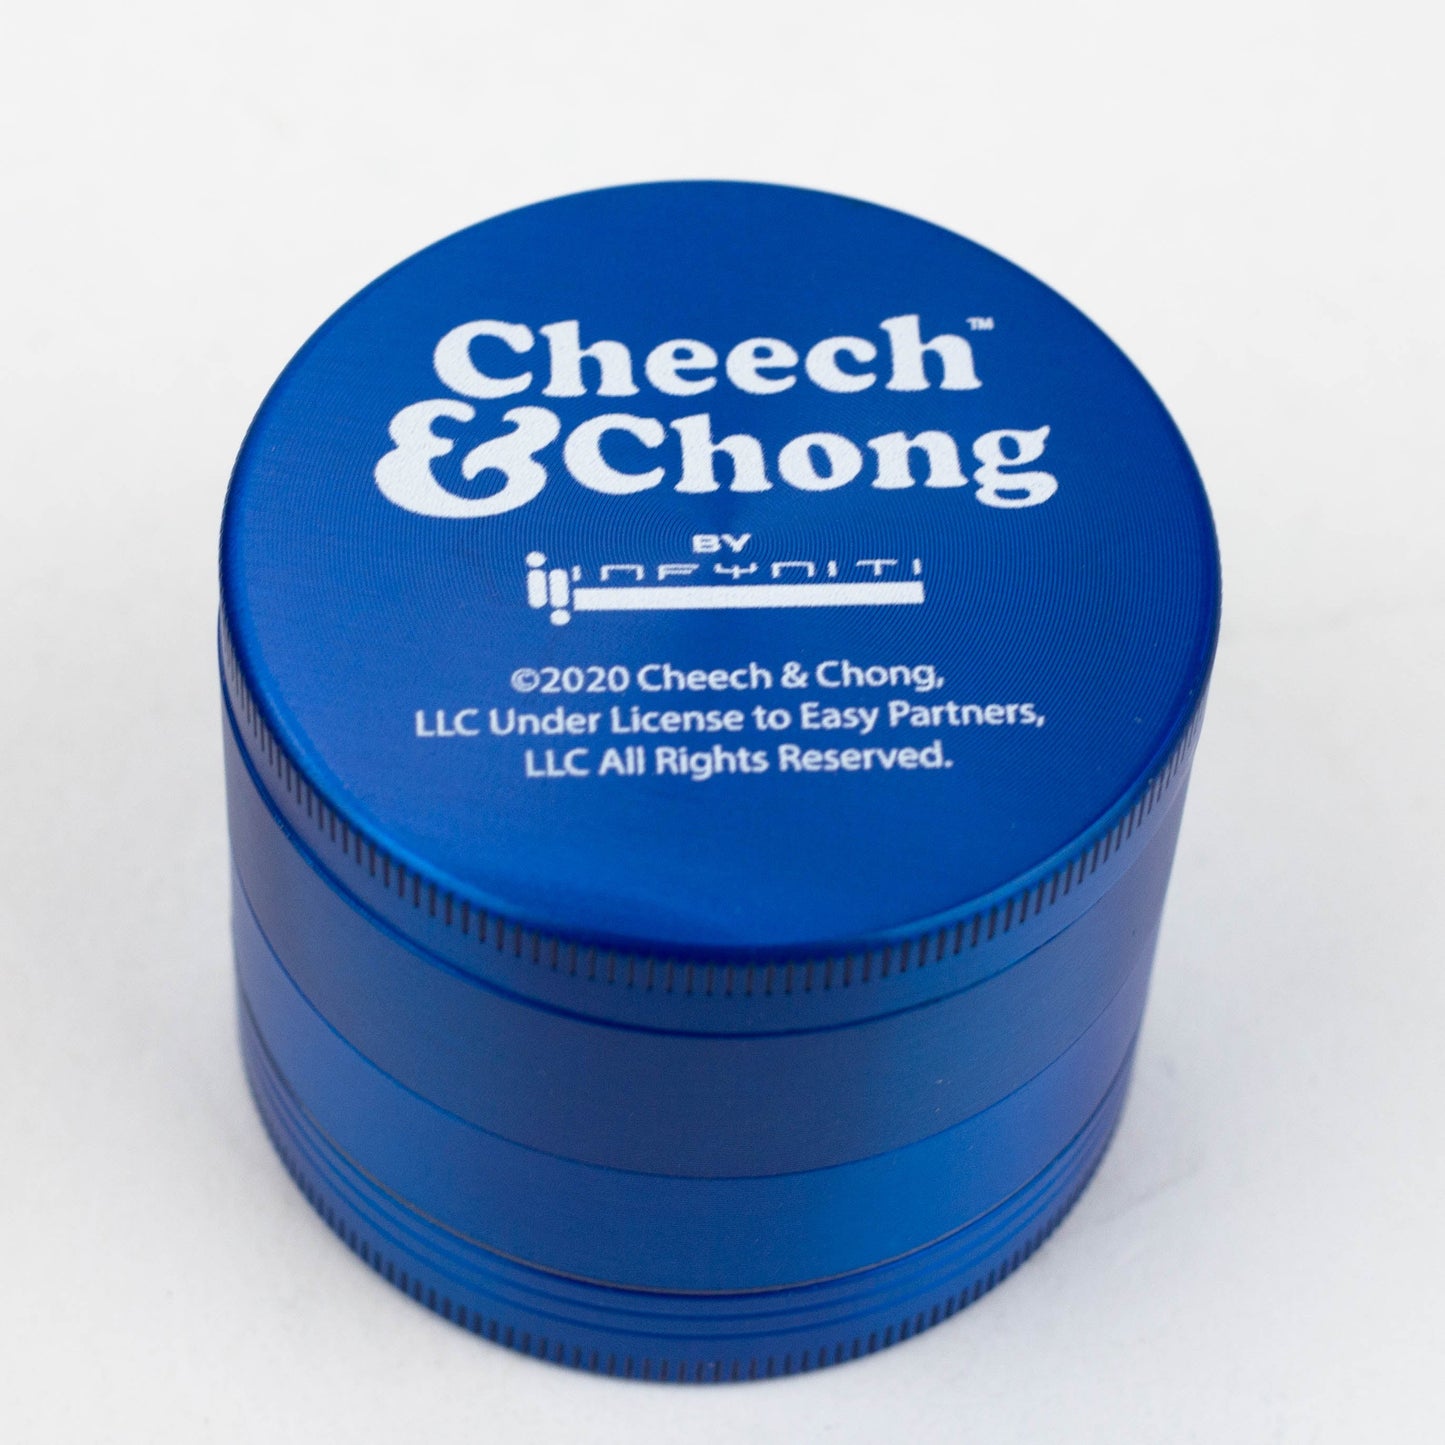 Cheeck & Chong - 4 parts metal grinder by Infyniti_4